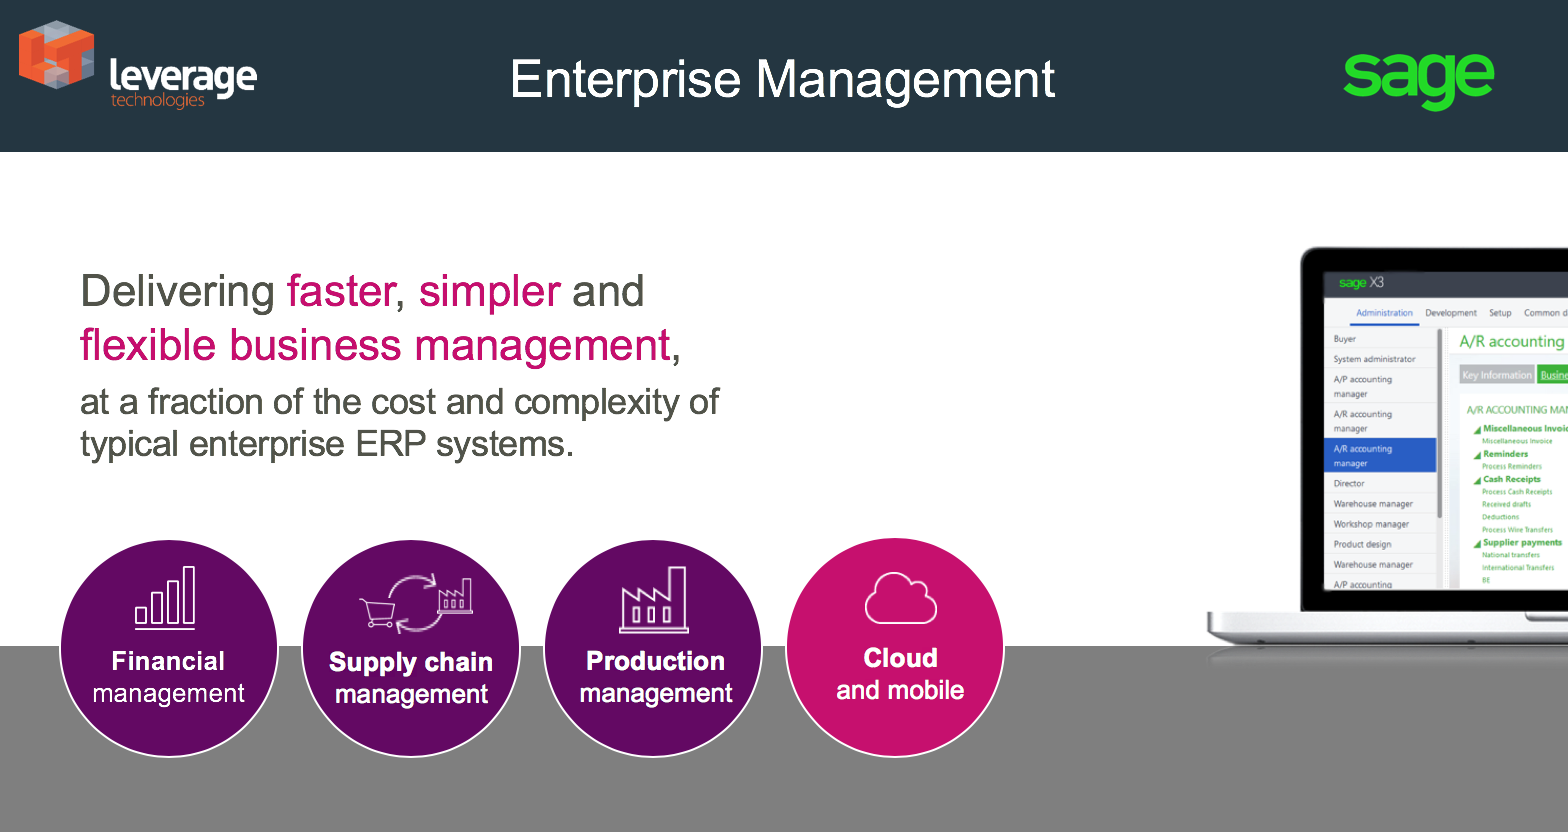 Who is Sage Business Cloud Enterprise Management for?